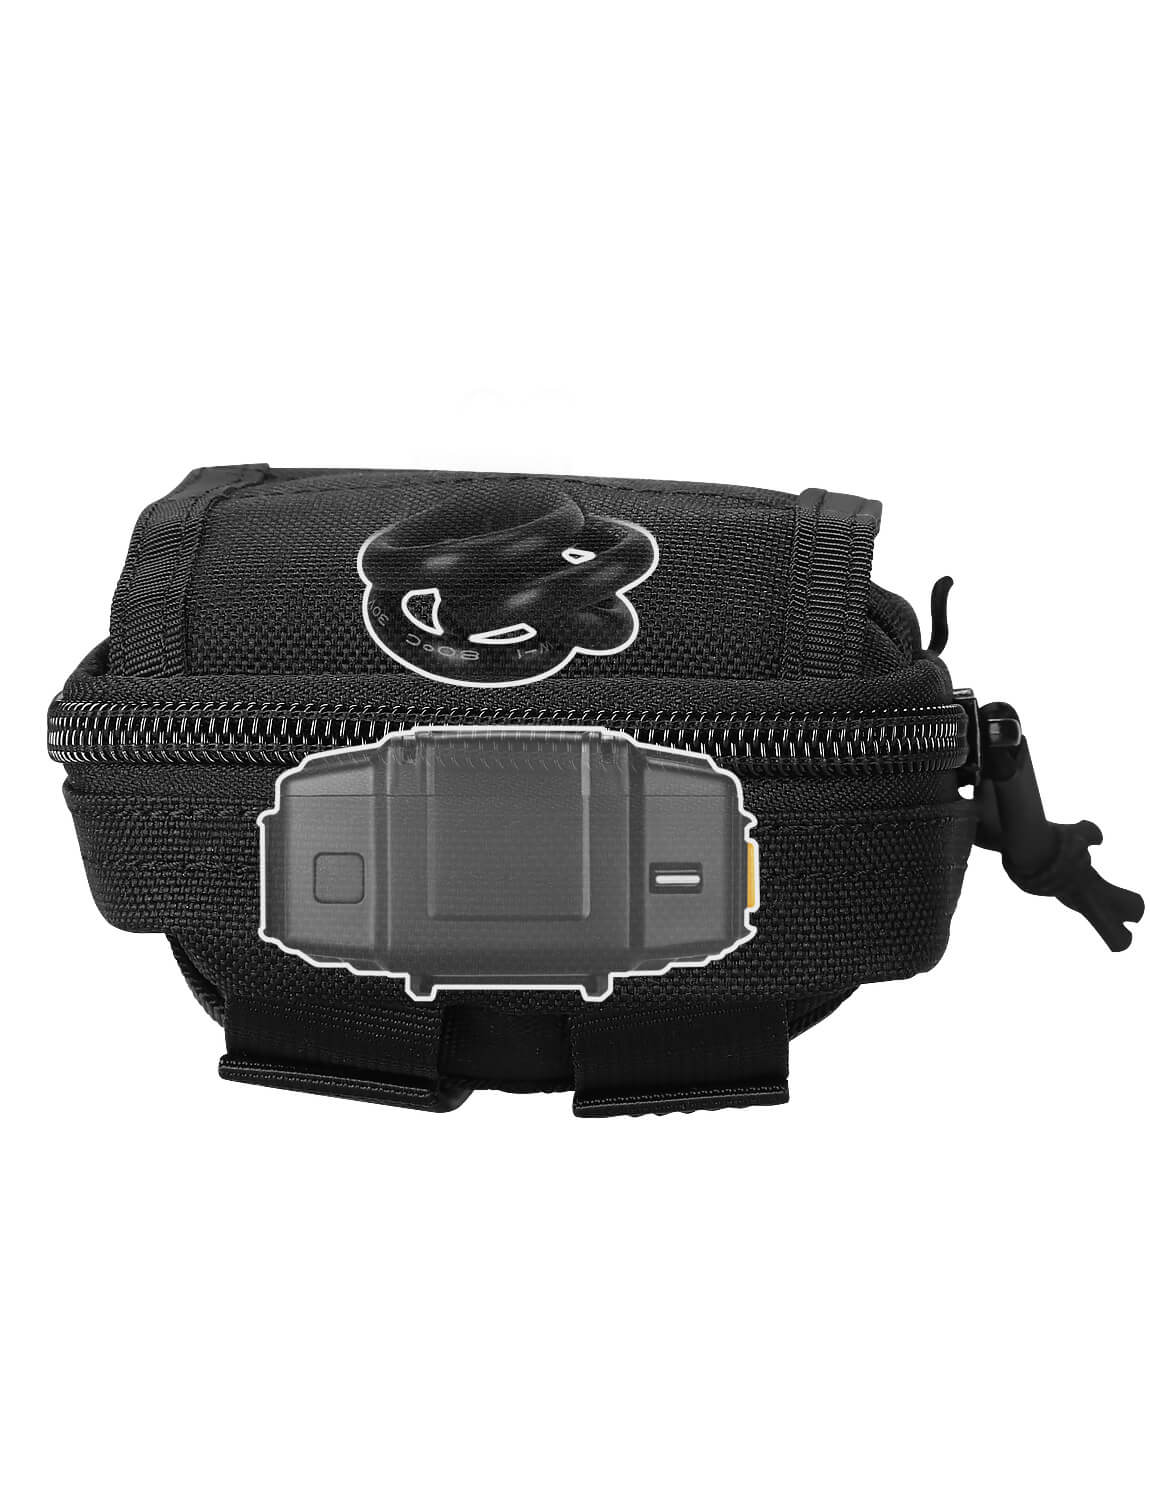 BOBLOV Body Camera Bag Carrying Case